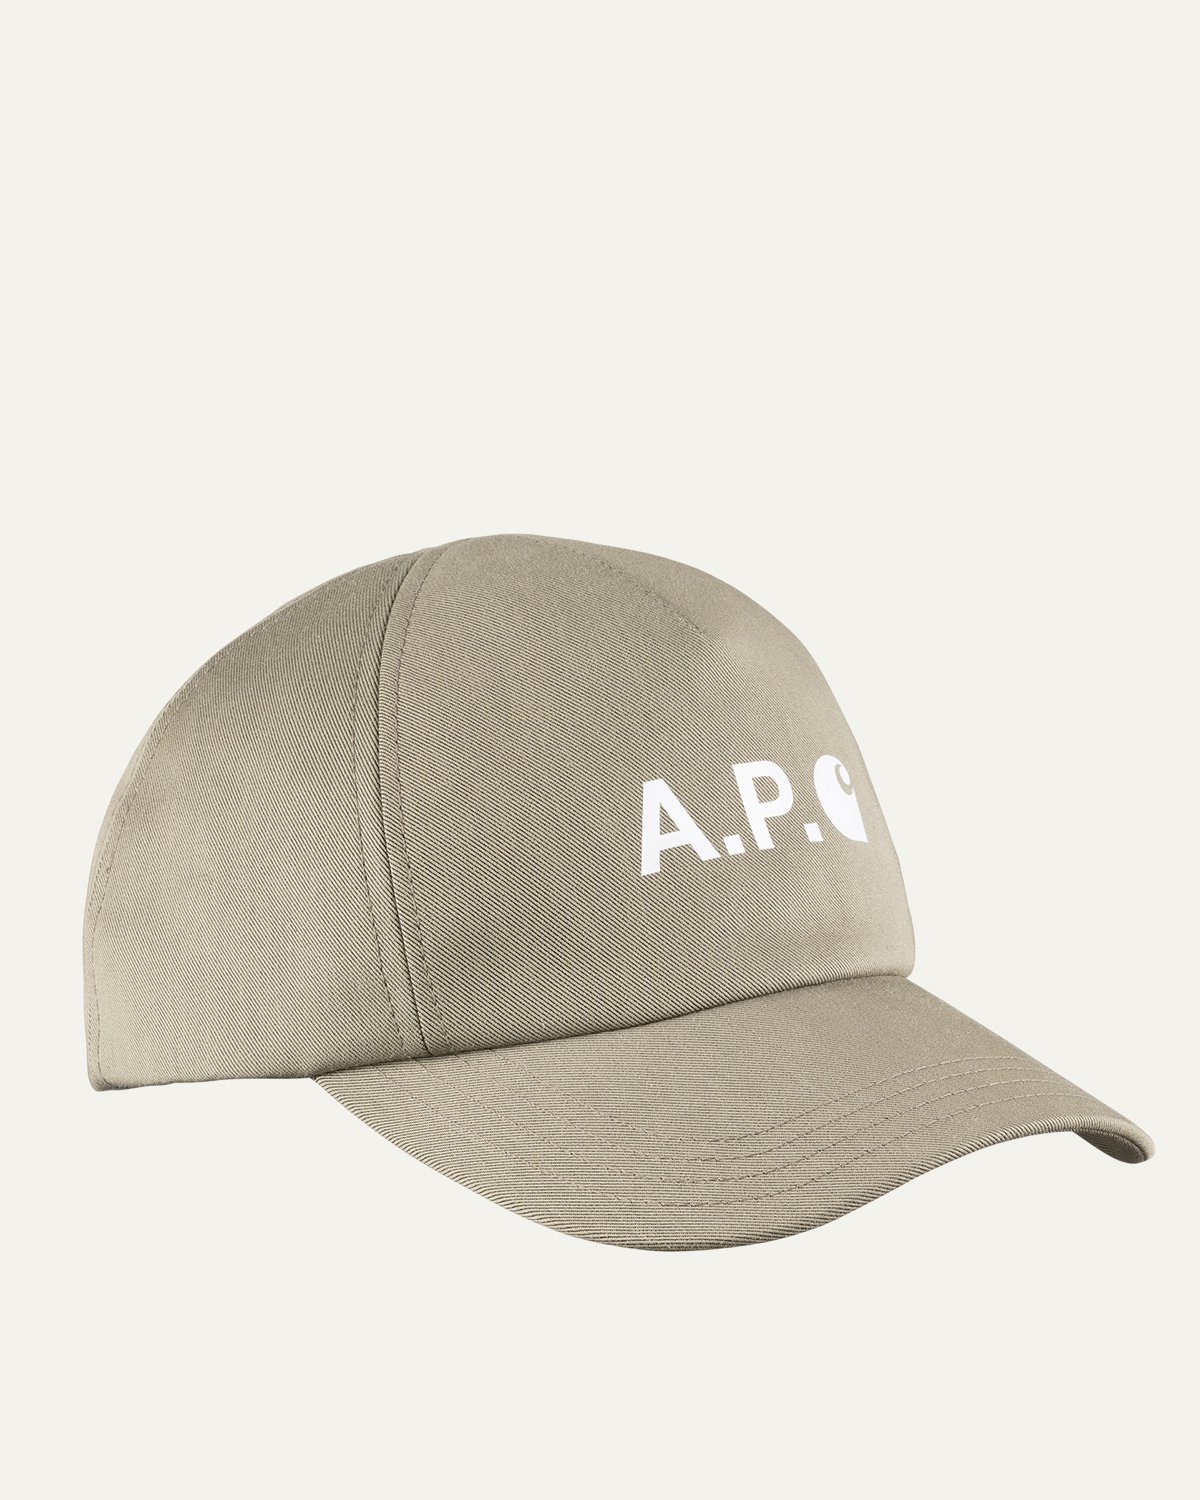 A.P.C. x Carhartt WIP - Cameron Baseball Cap Khaki - Accessories - Green - Image 1